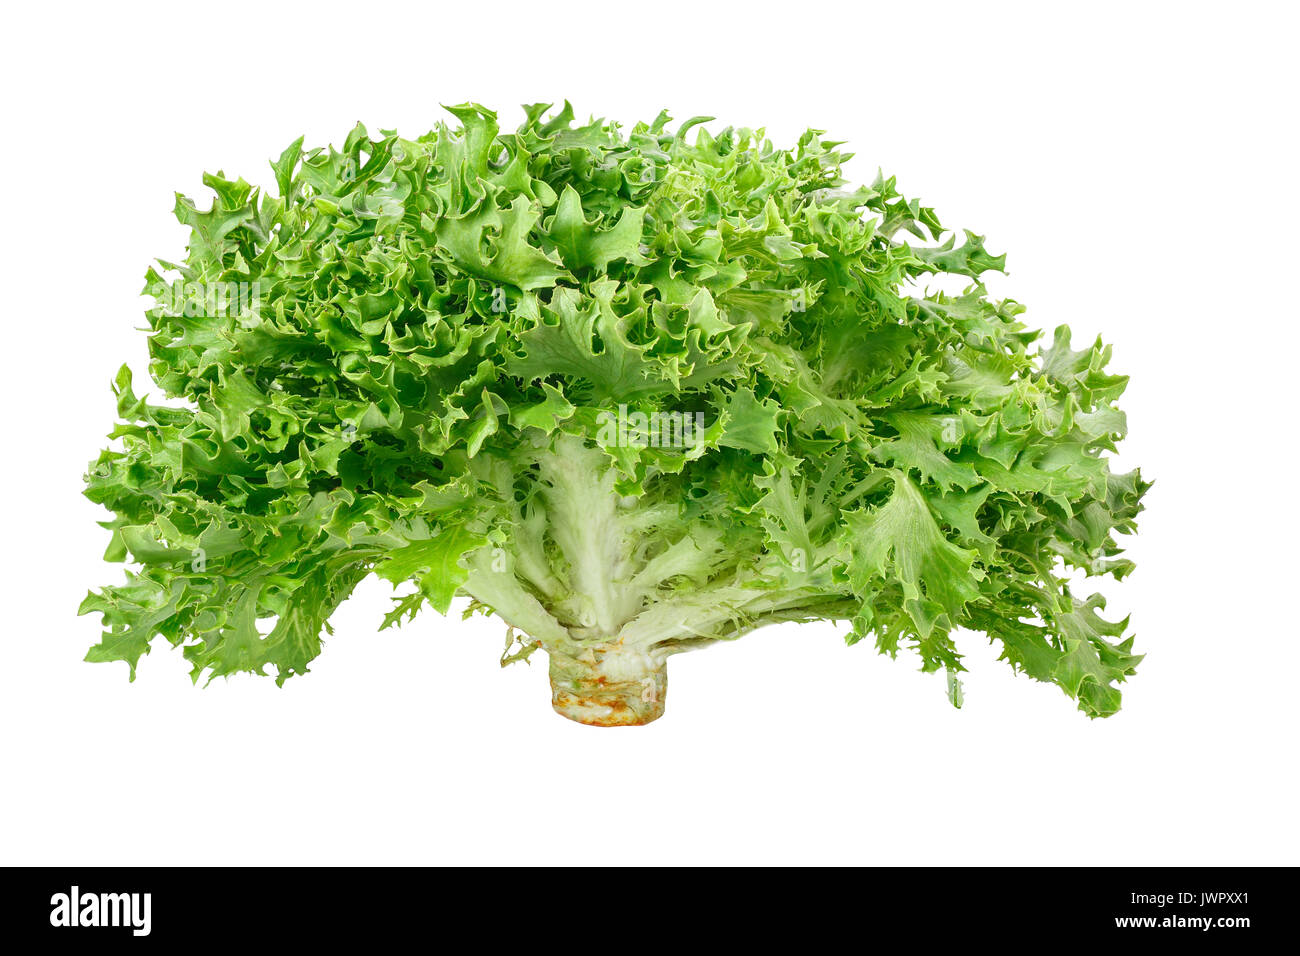 Fresh Green Frisee Lettuce Isolated On White Background Vegetable Salad Lettuce Crispy Endive Stock Photo Alamy